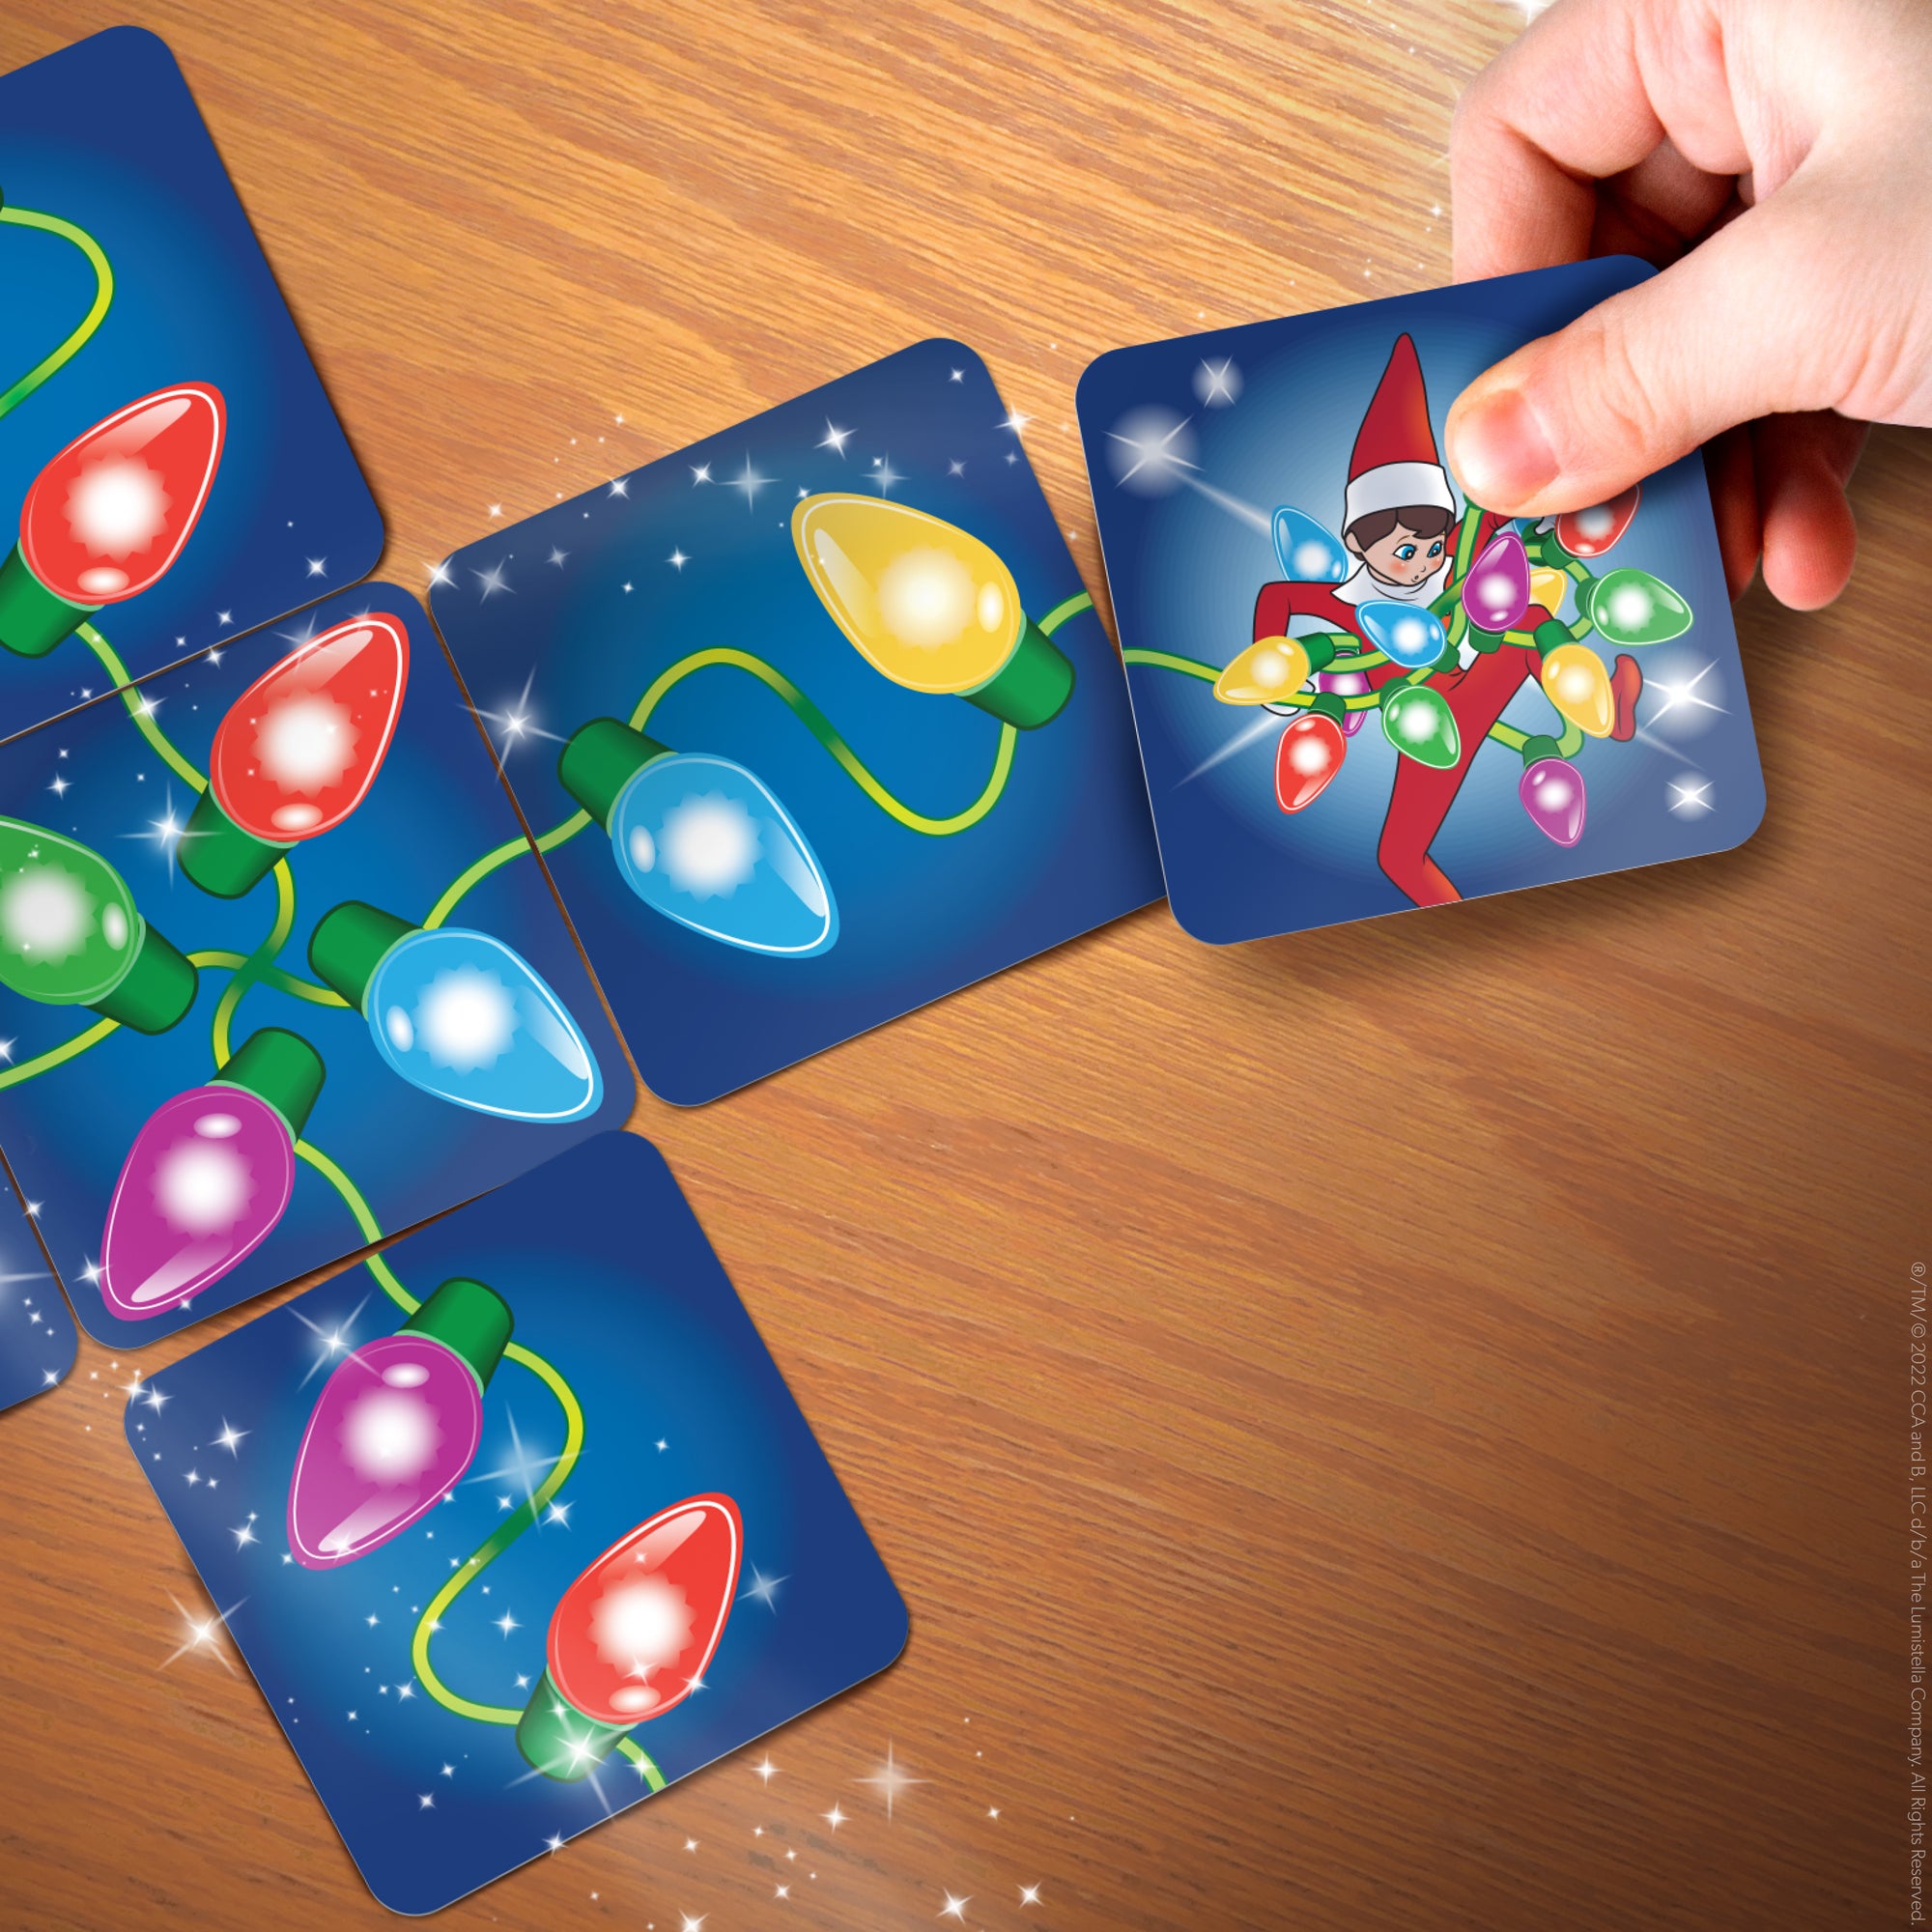 ELF ON THE SHELF - Tangled Twistmas Card Game